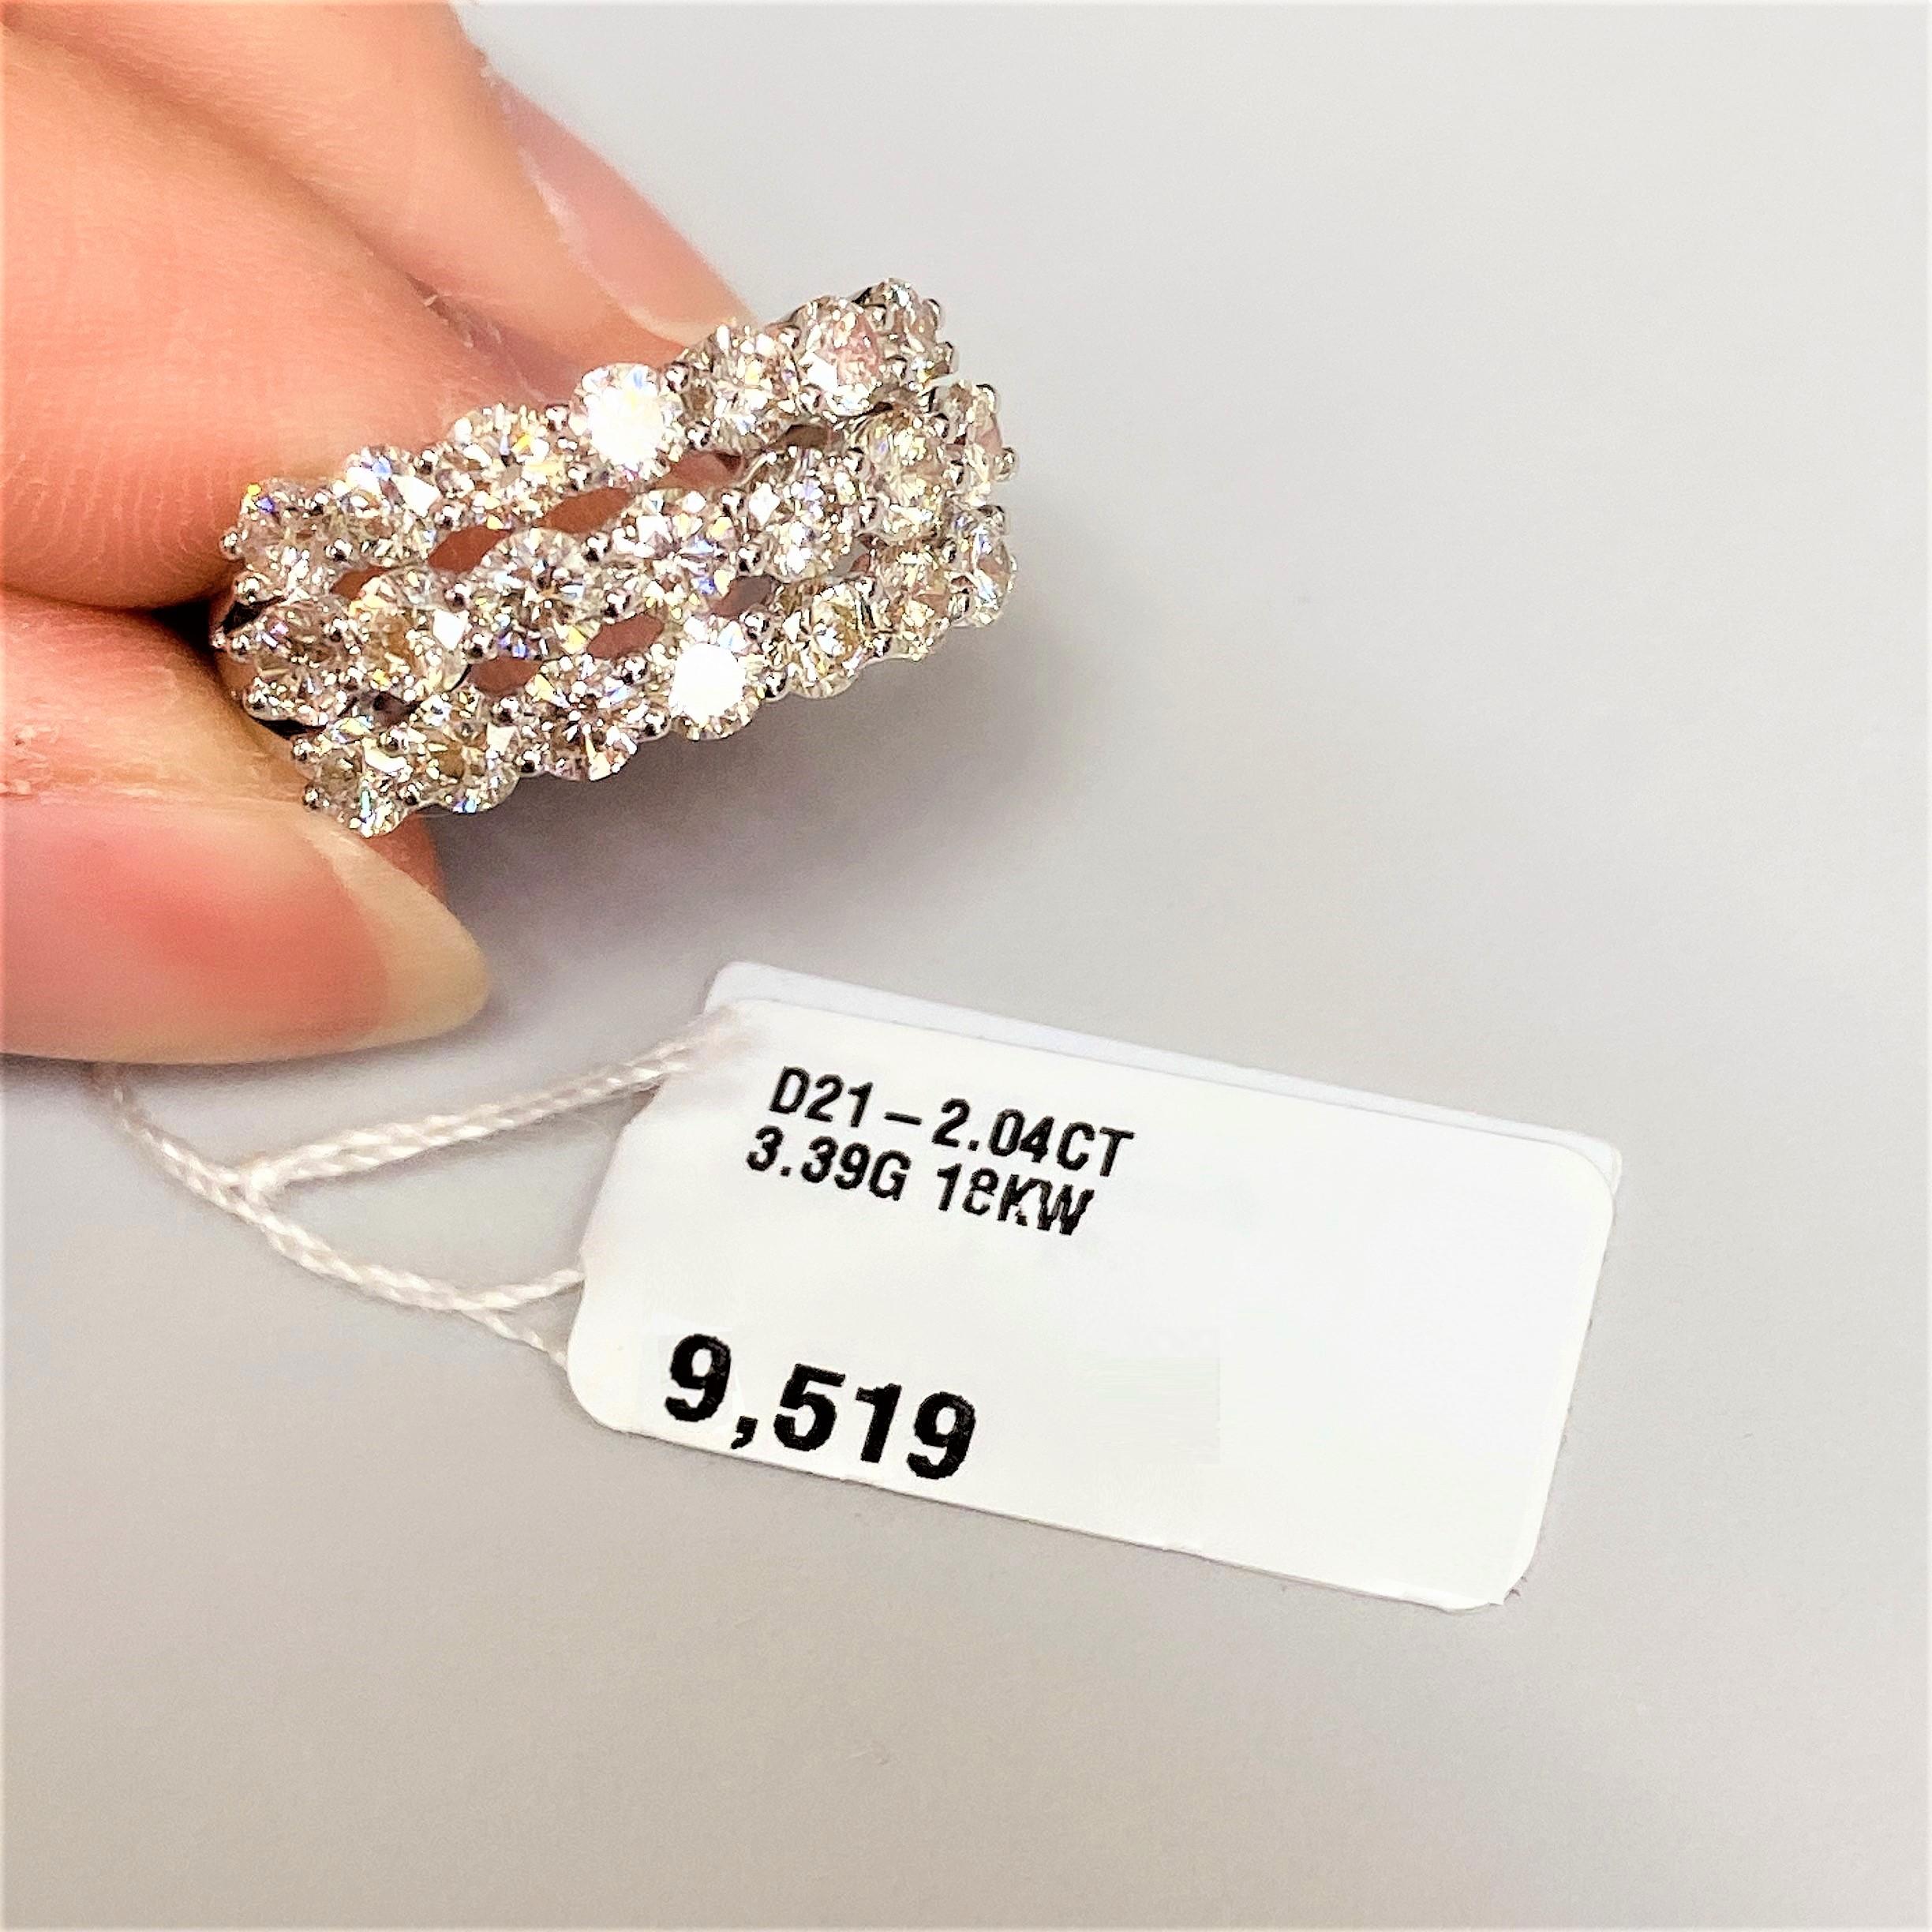 NWT $9, 519 18KT Fancy Large Glittering Fancy Round Diamond Band Ring Neuf - En vente à New York, NY